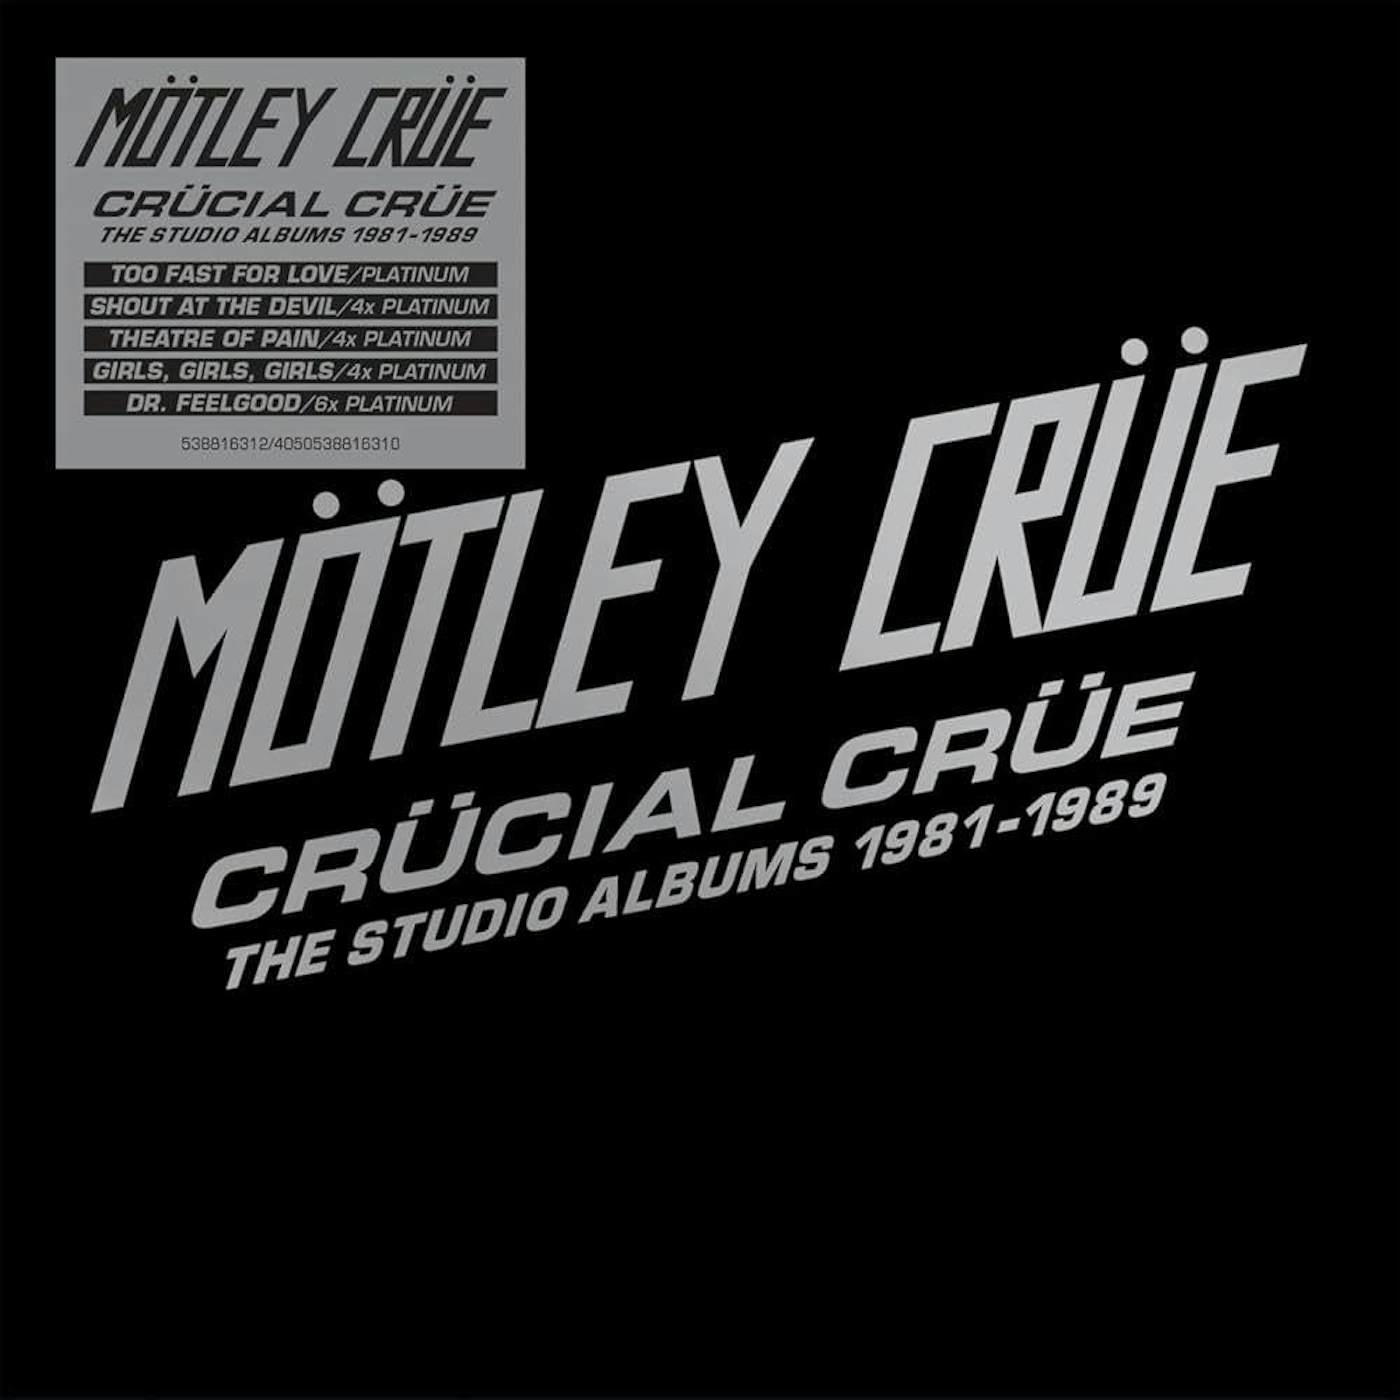 Mötley Crüe Crucial Crue - The Studio Albums 1981-1989 (180g/5LP Boxset) Vinyl Record